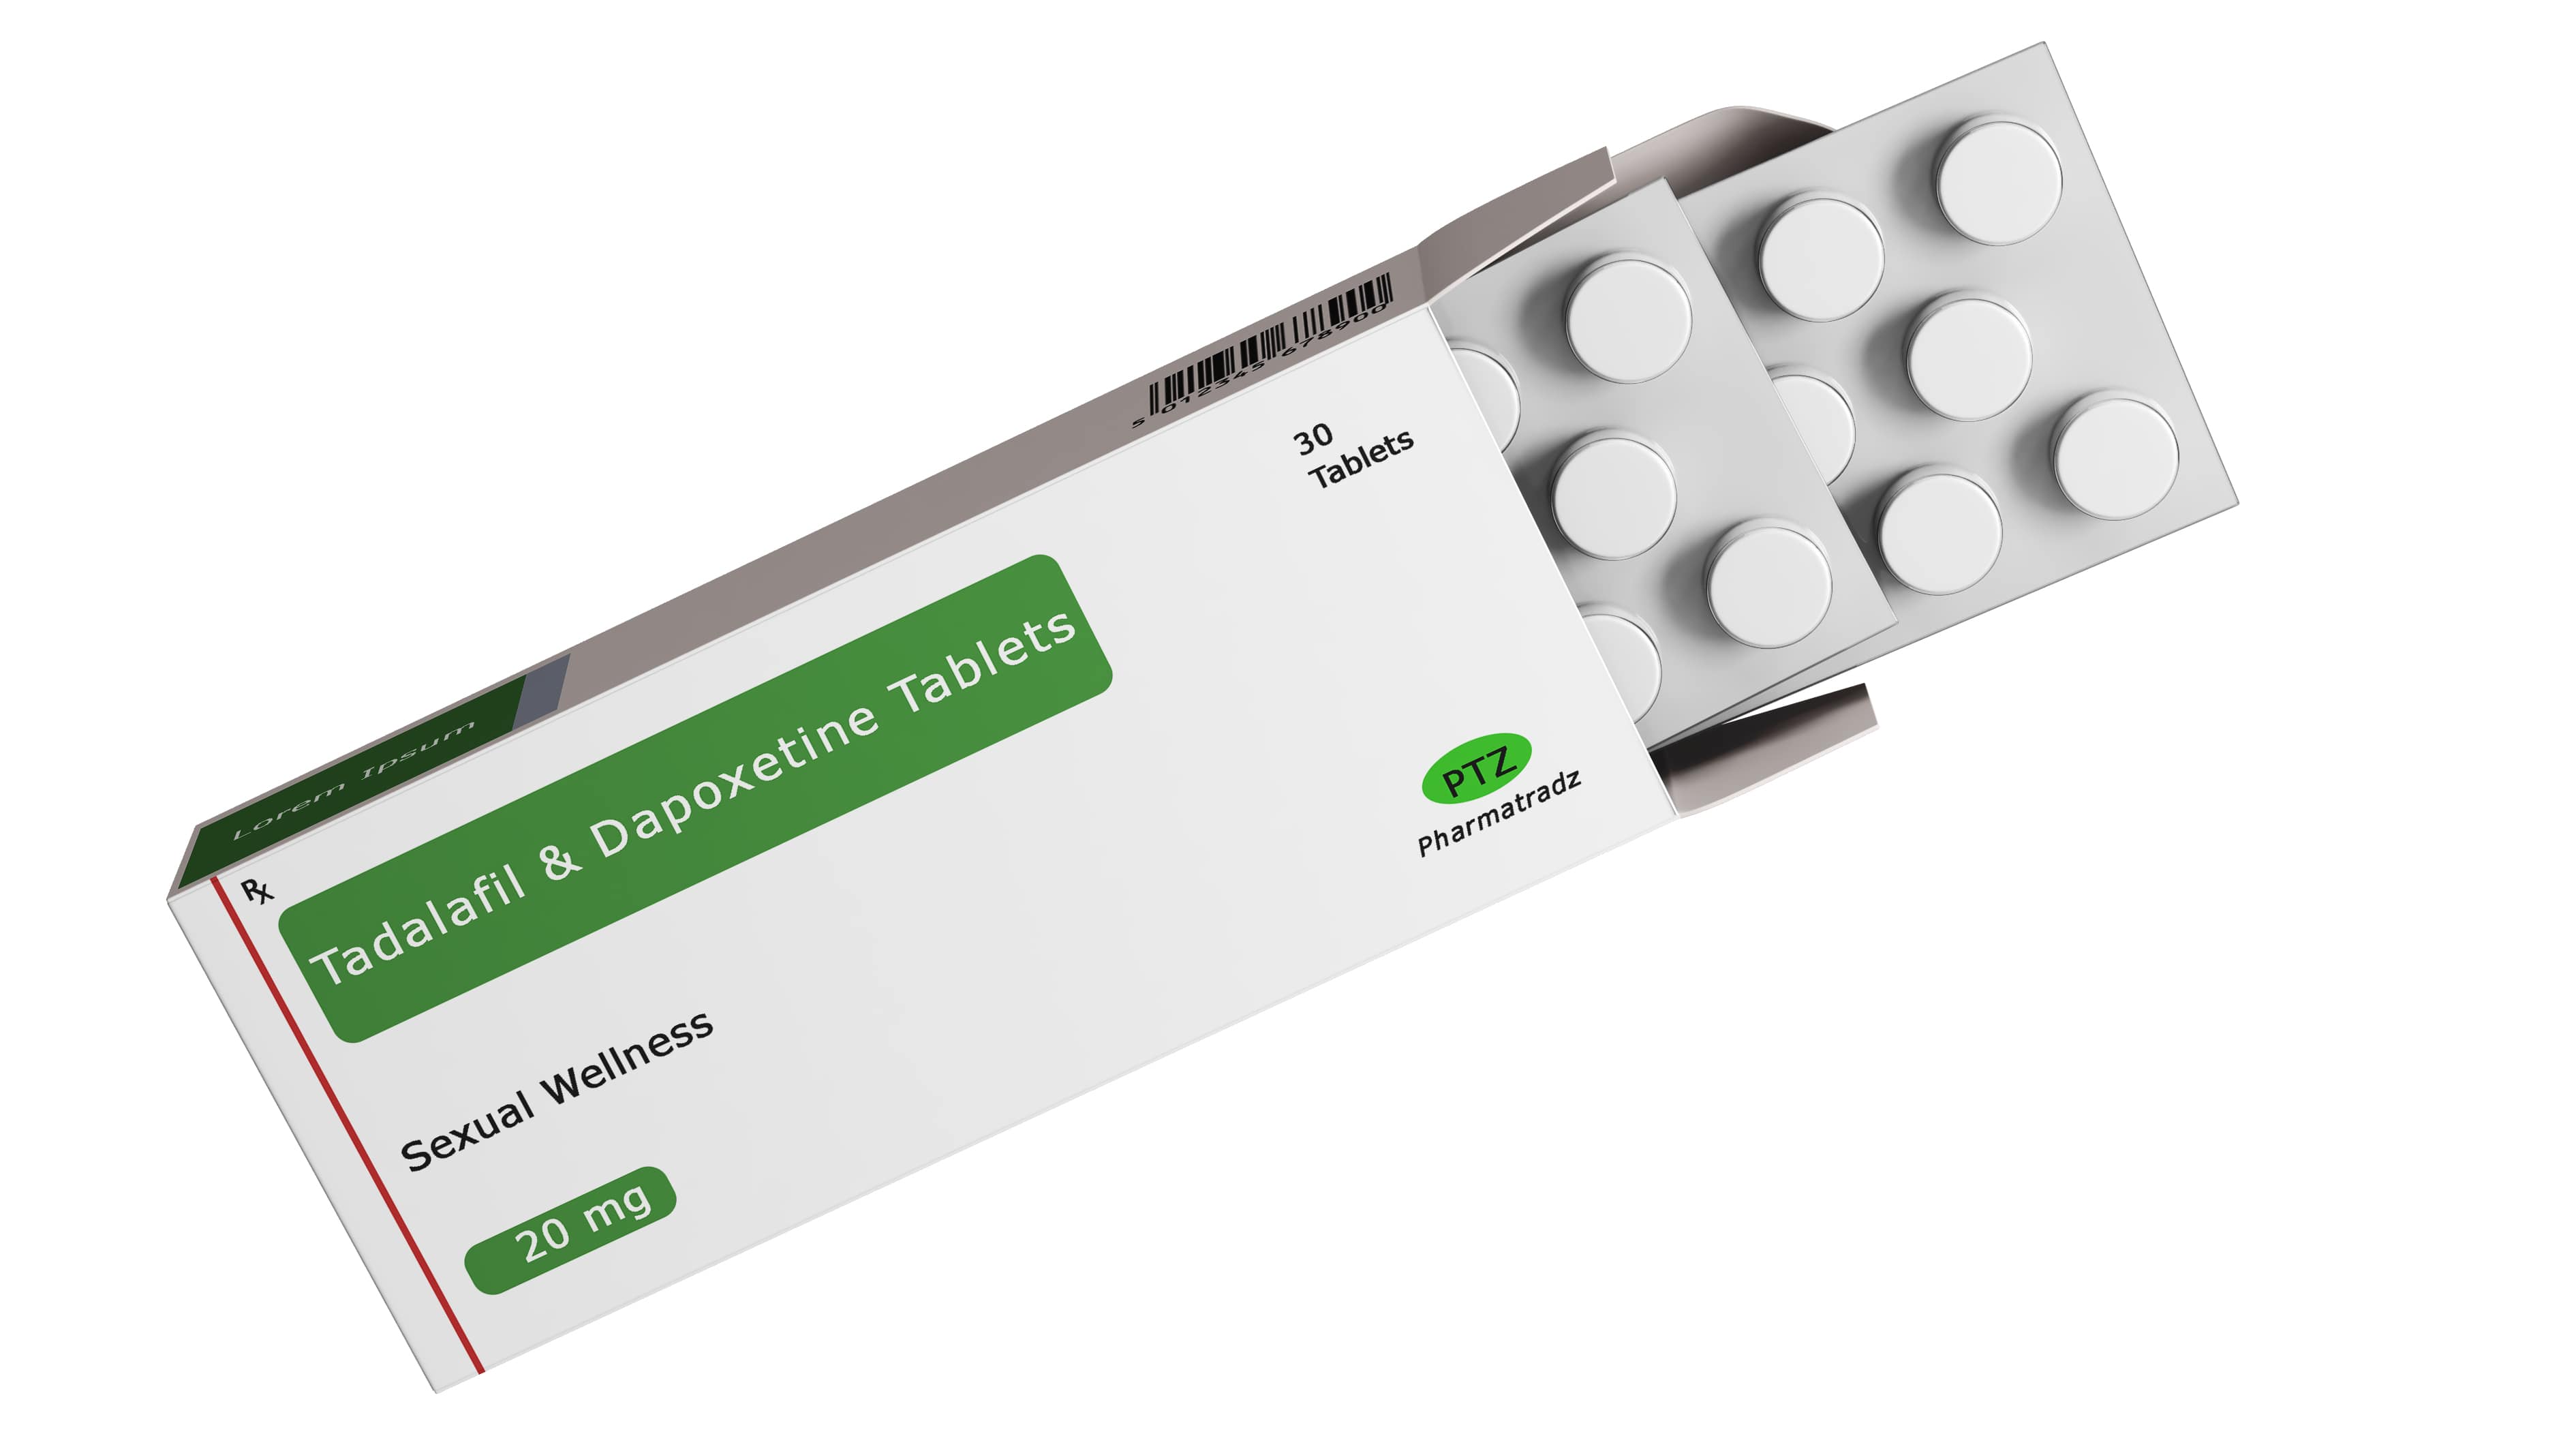 Tadalafil & Dapoxetine Tablets